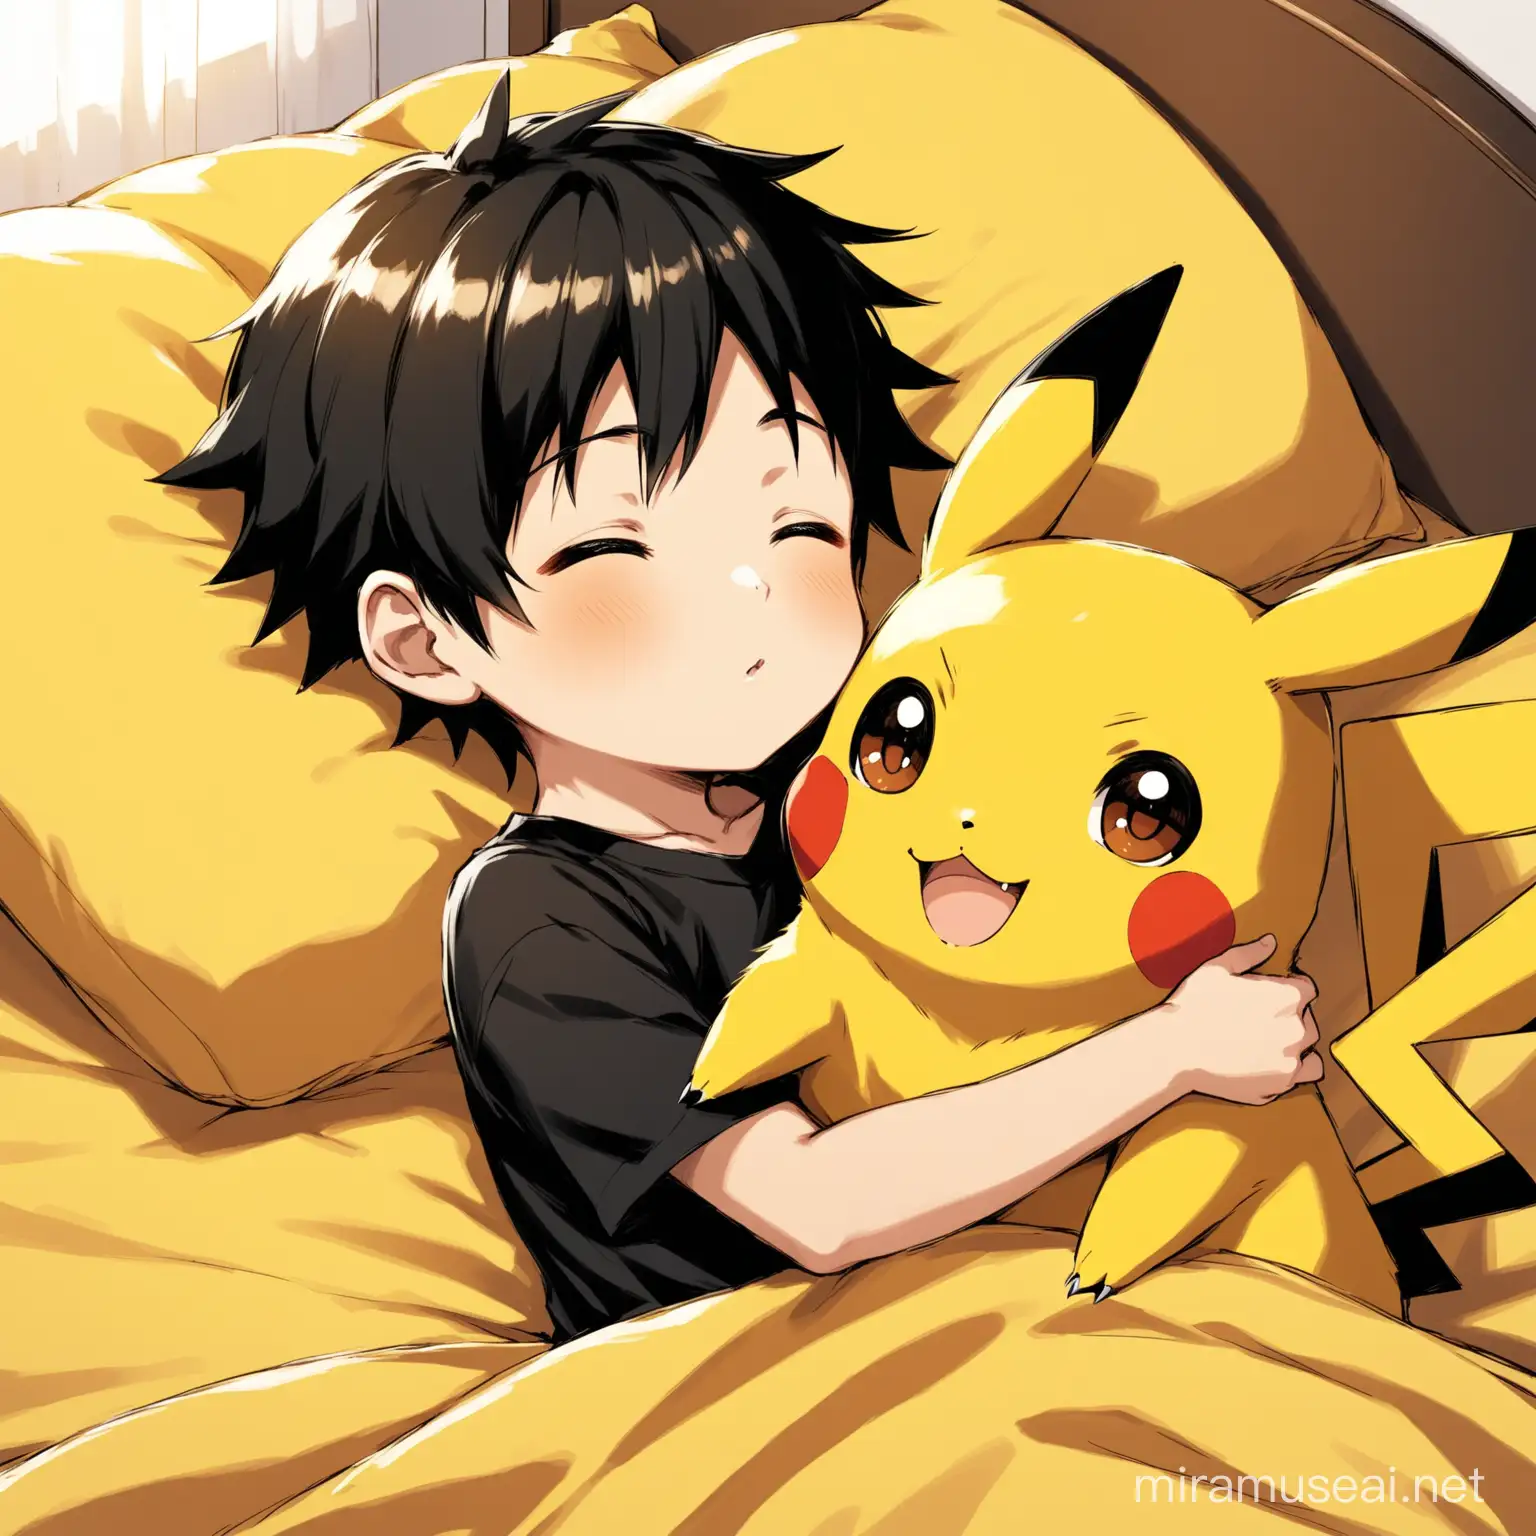 Sleeping Pikachu Adorable Scene with a Boy in Black Dress